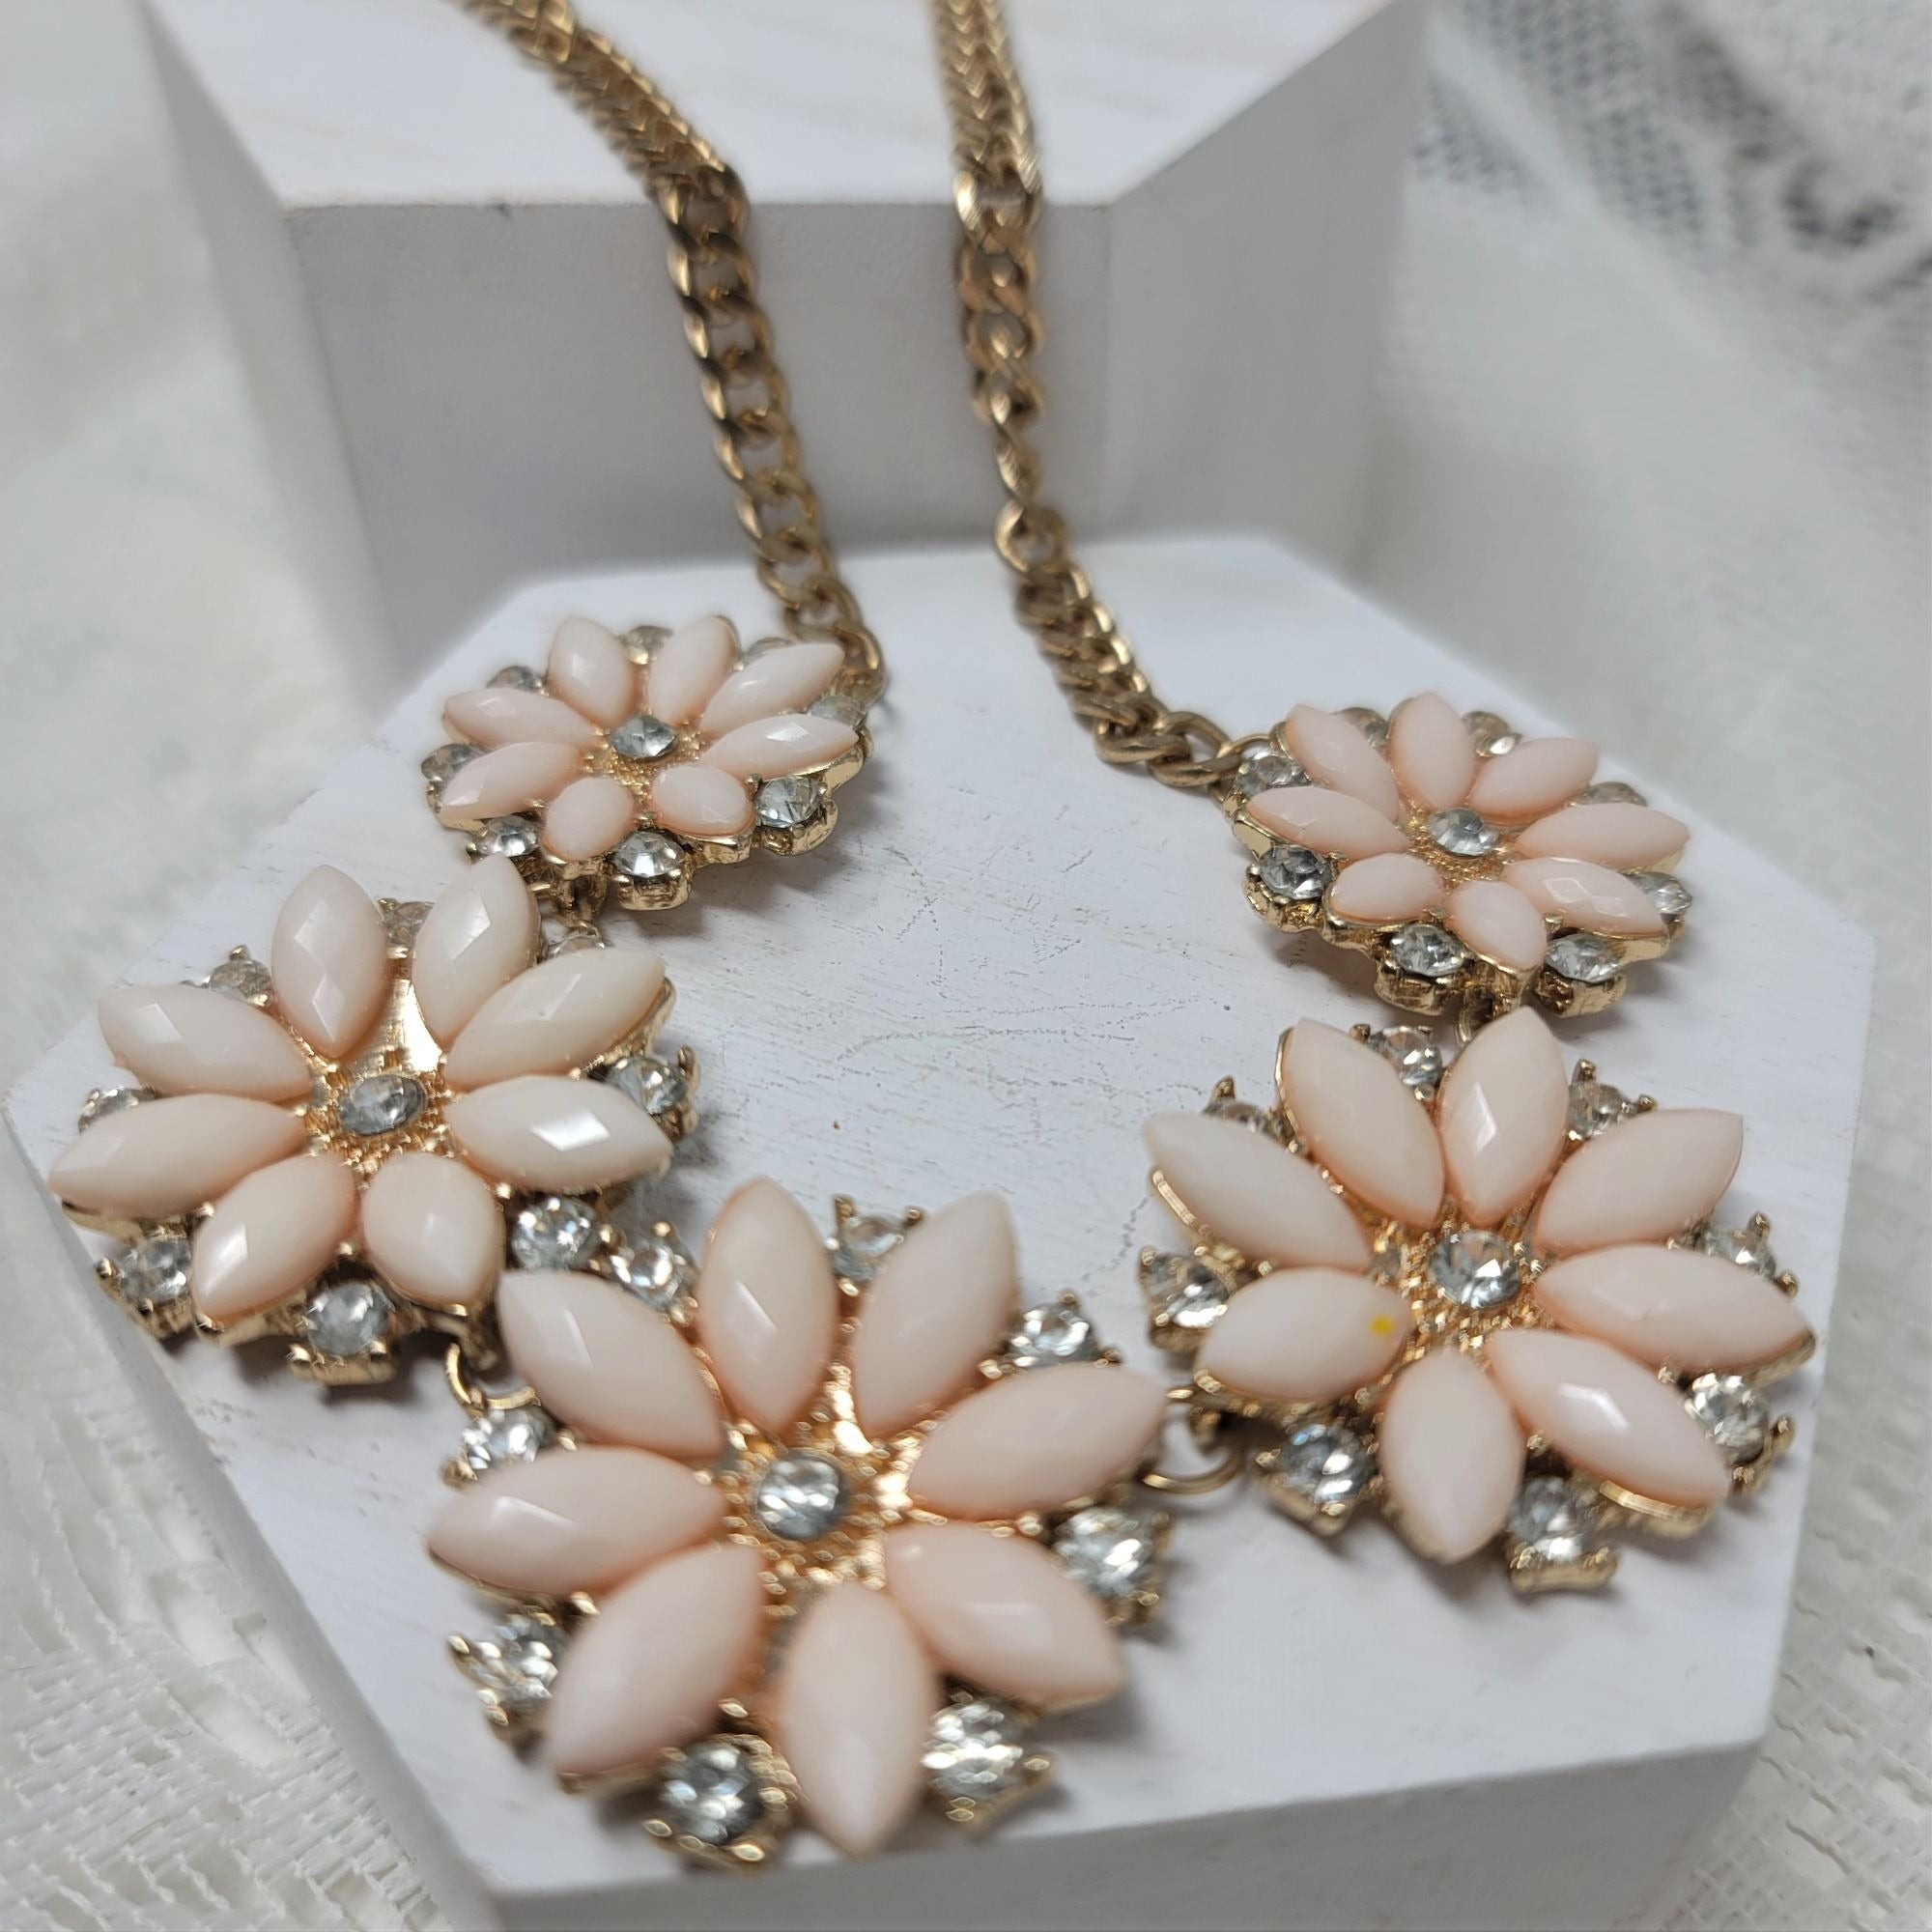 Pink Flower & Rhinestone Necklace Goldtone